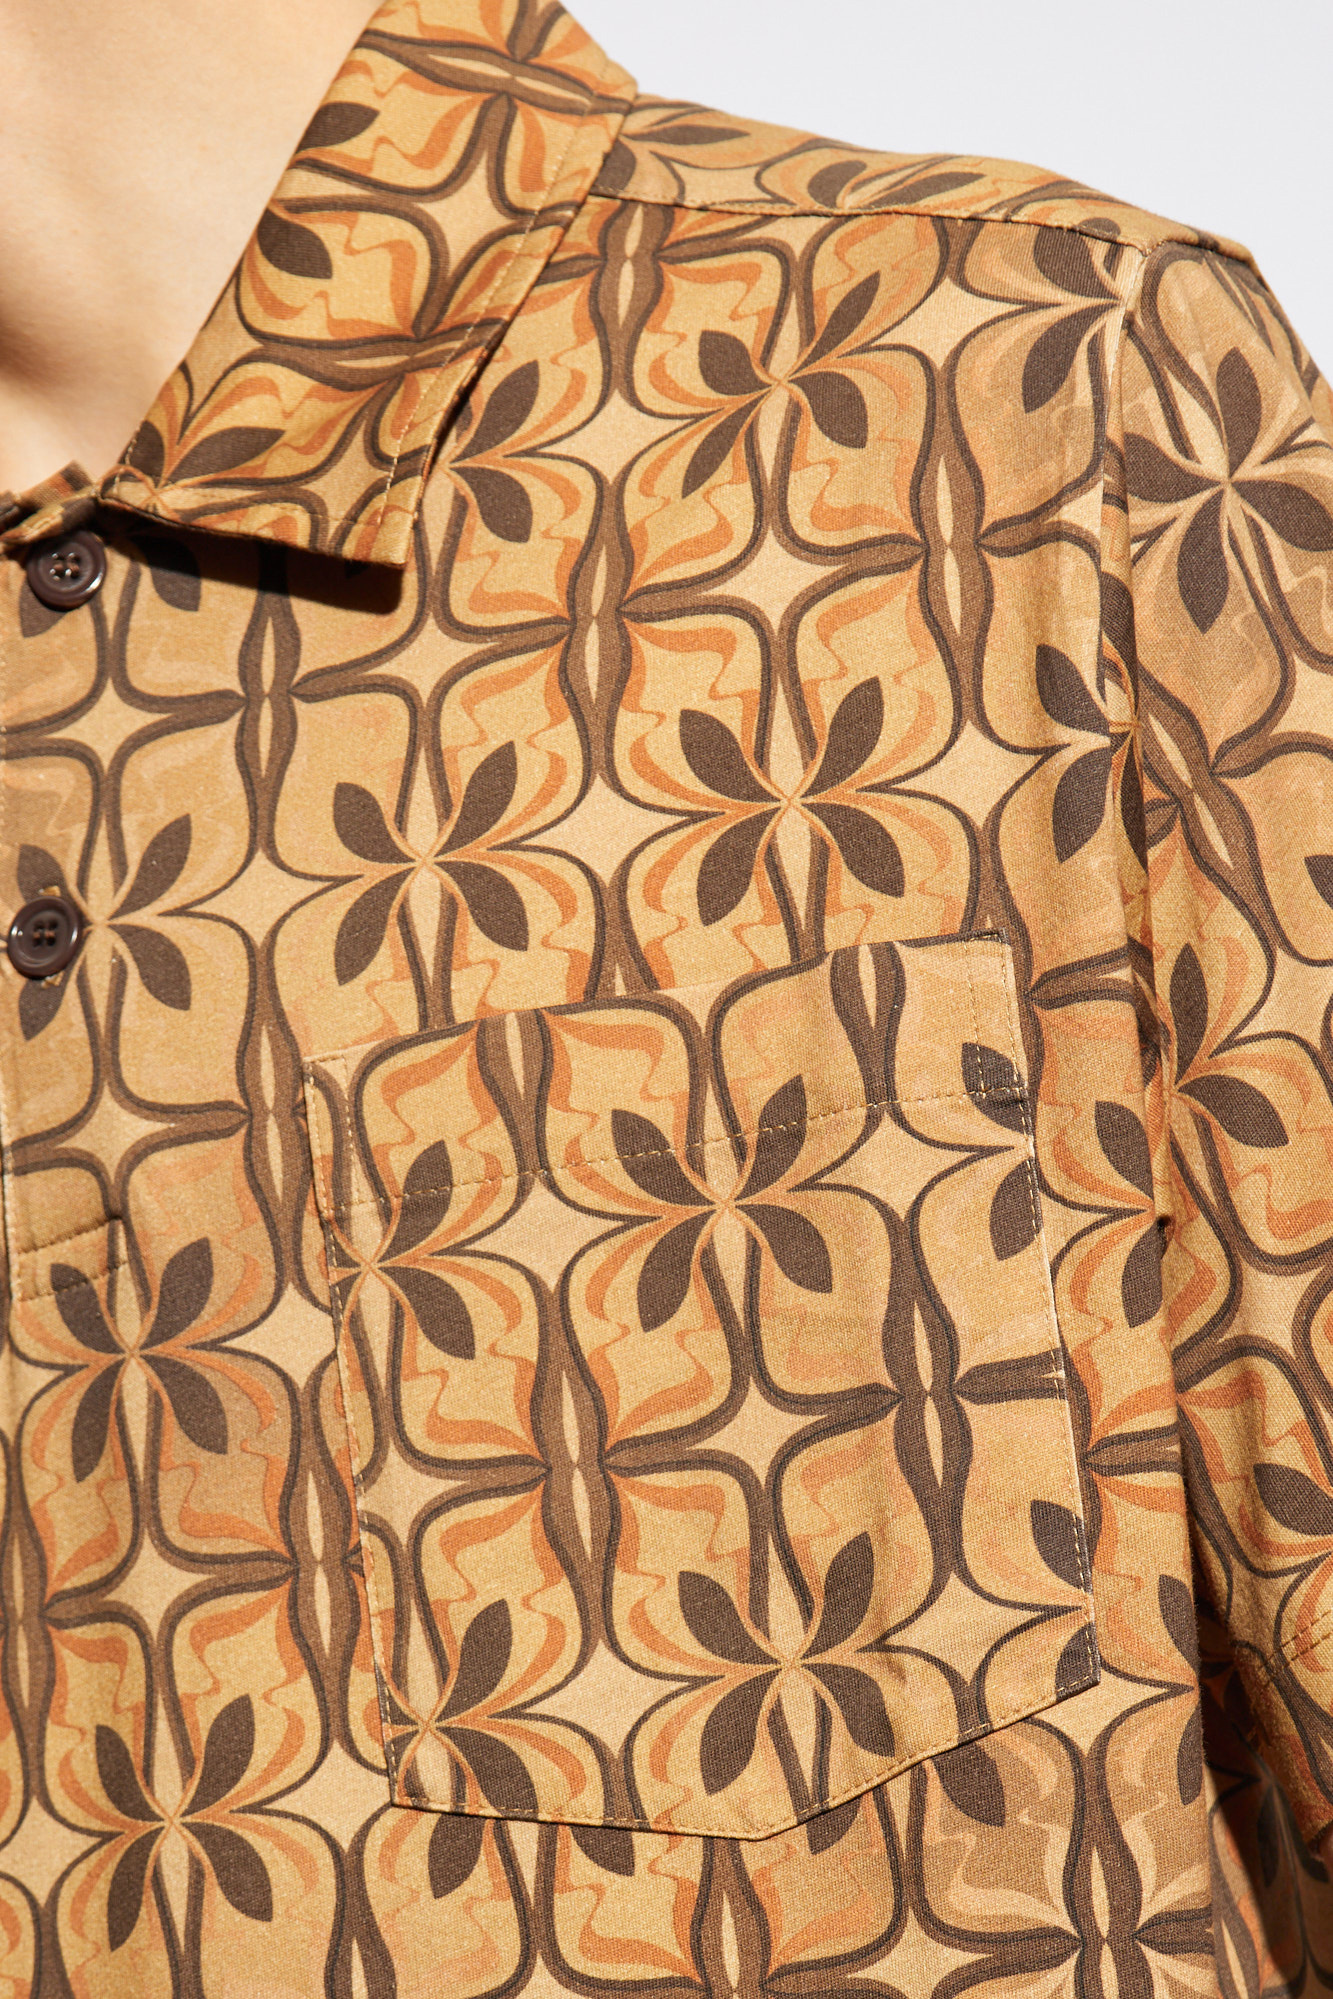 Dries Van Noten polo dress shirt with floral motif